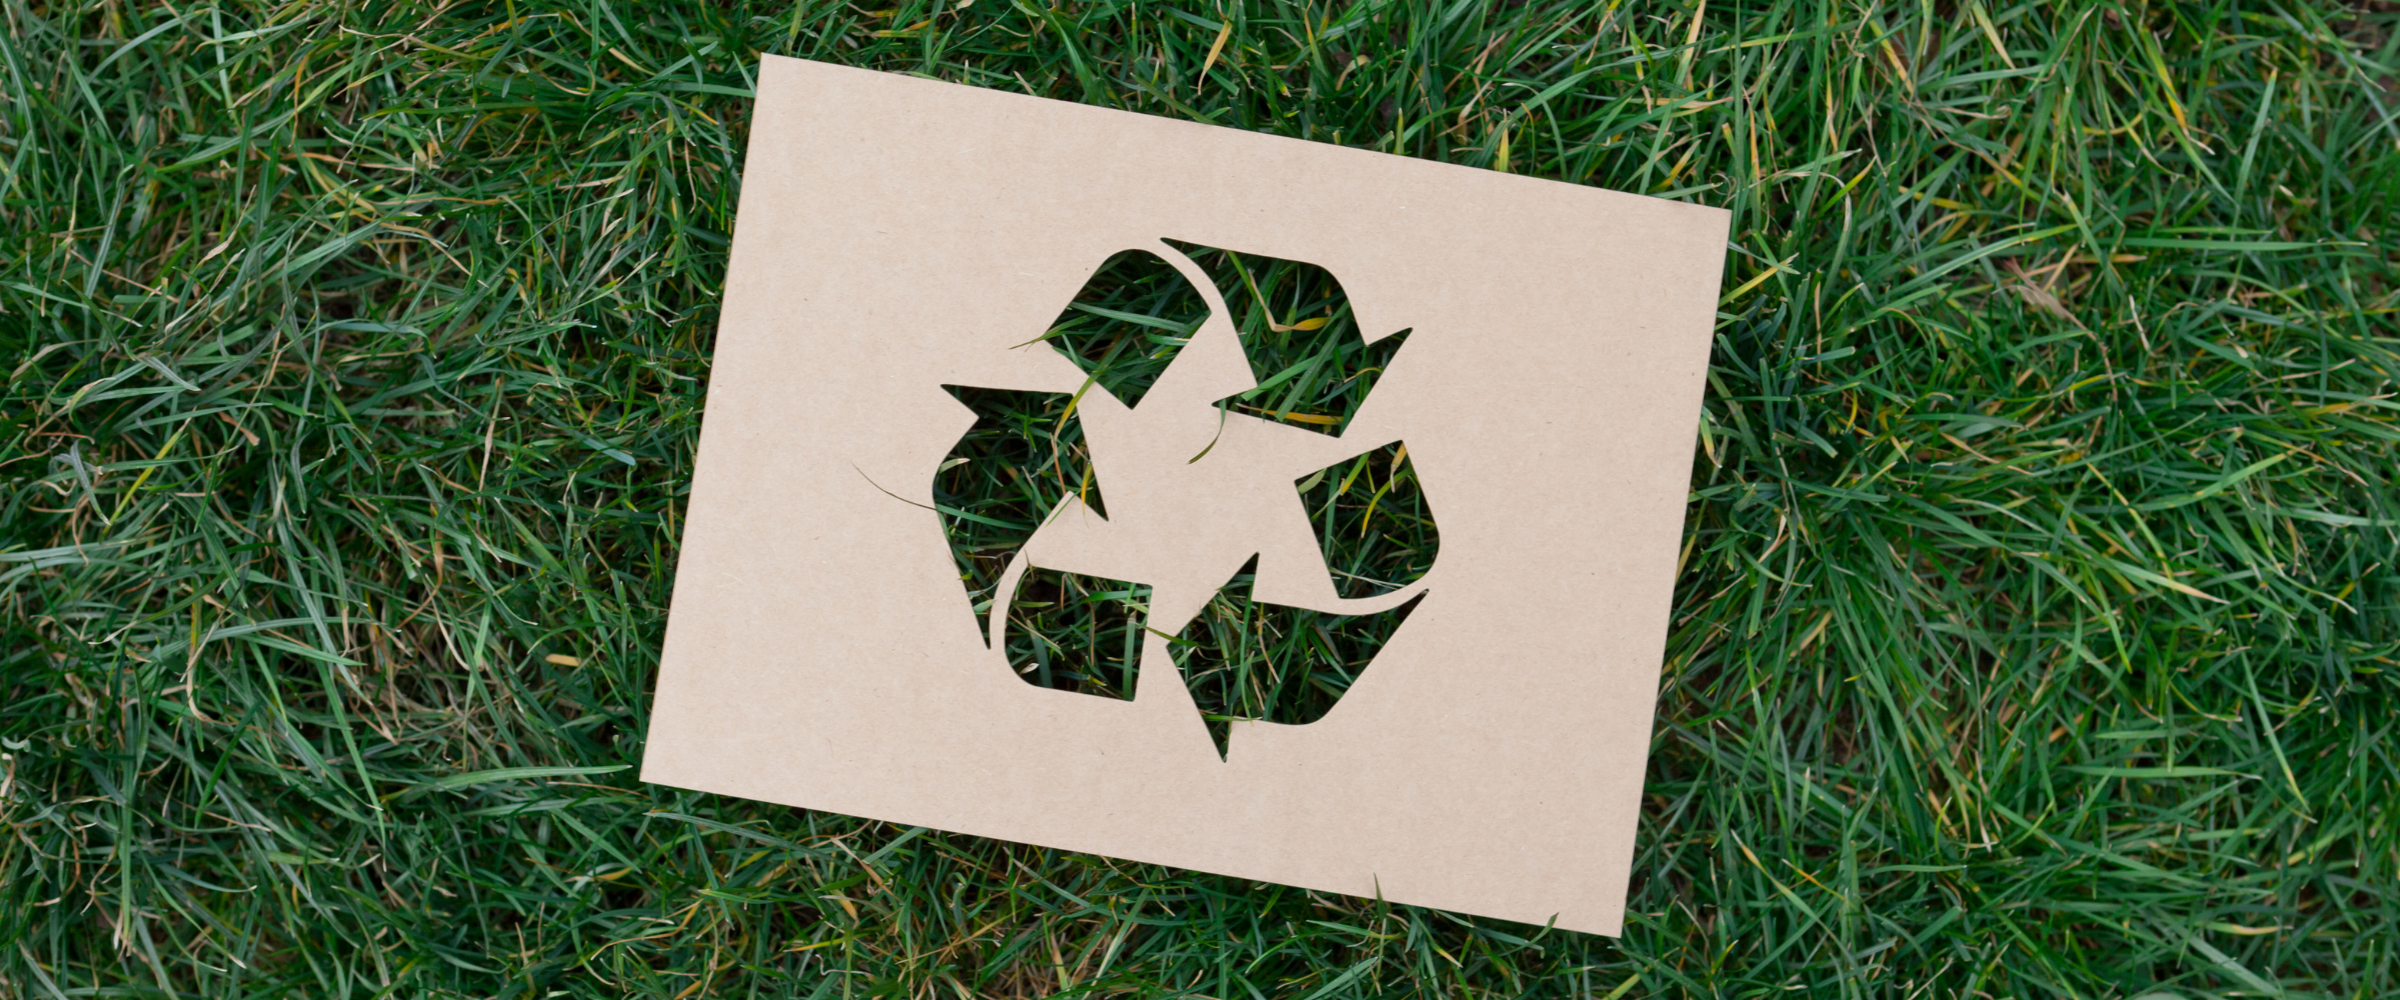 Recycling cutout on grass